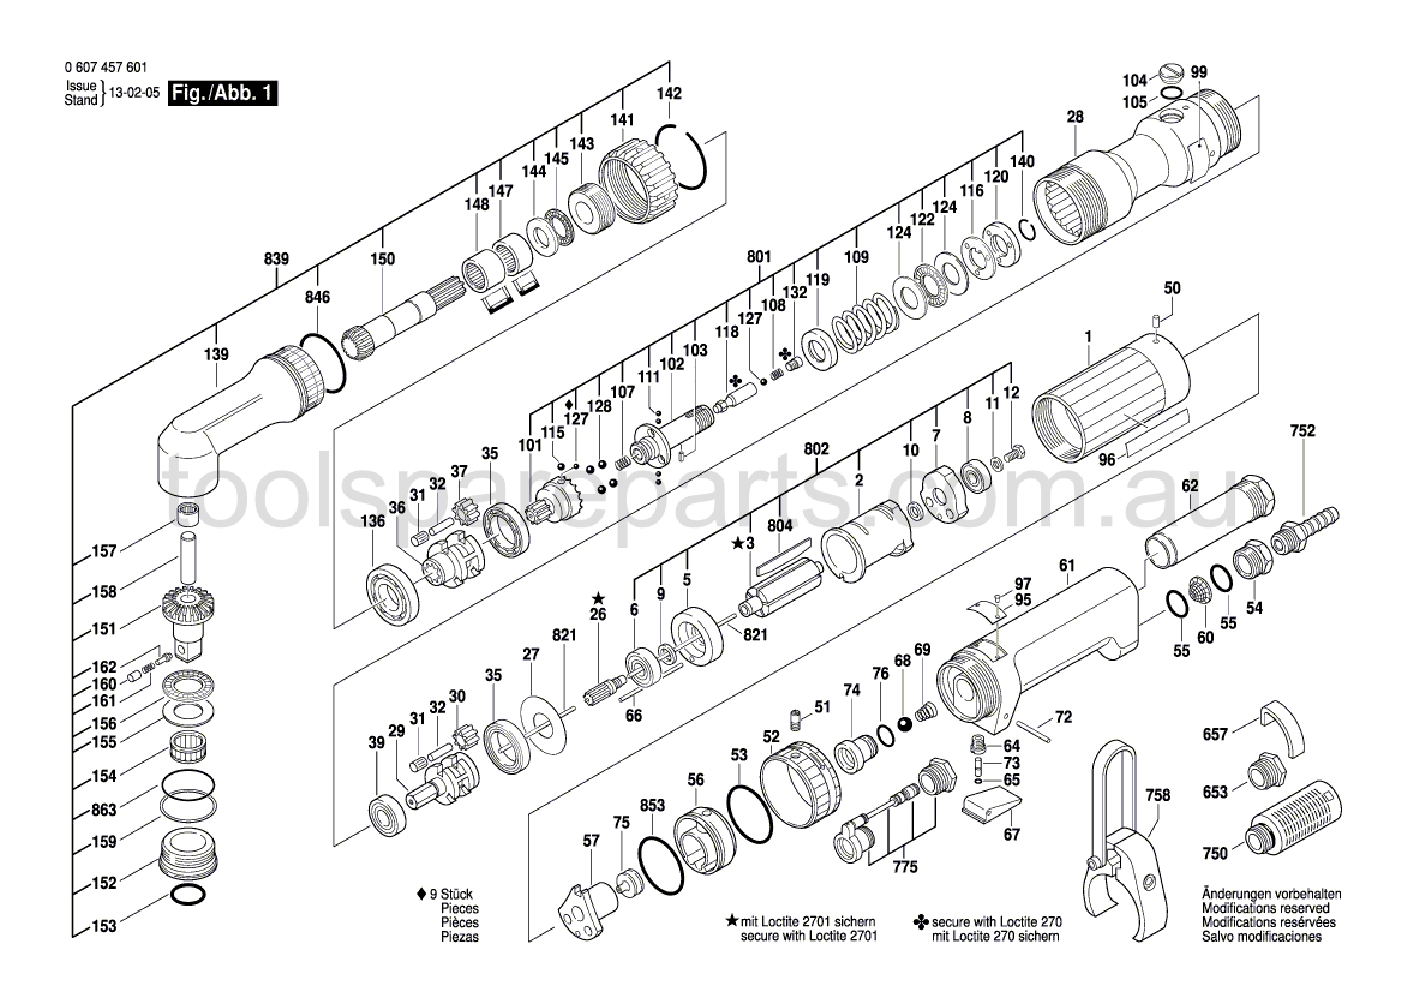 Bosch 740 WATT-SERIE 0607457601  Diagram 1